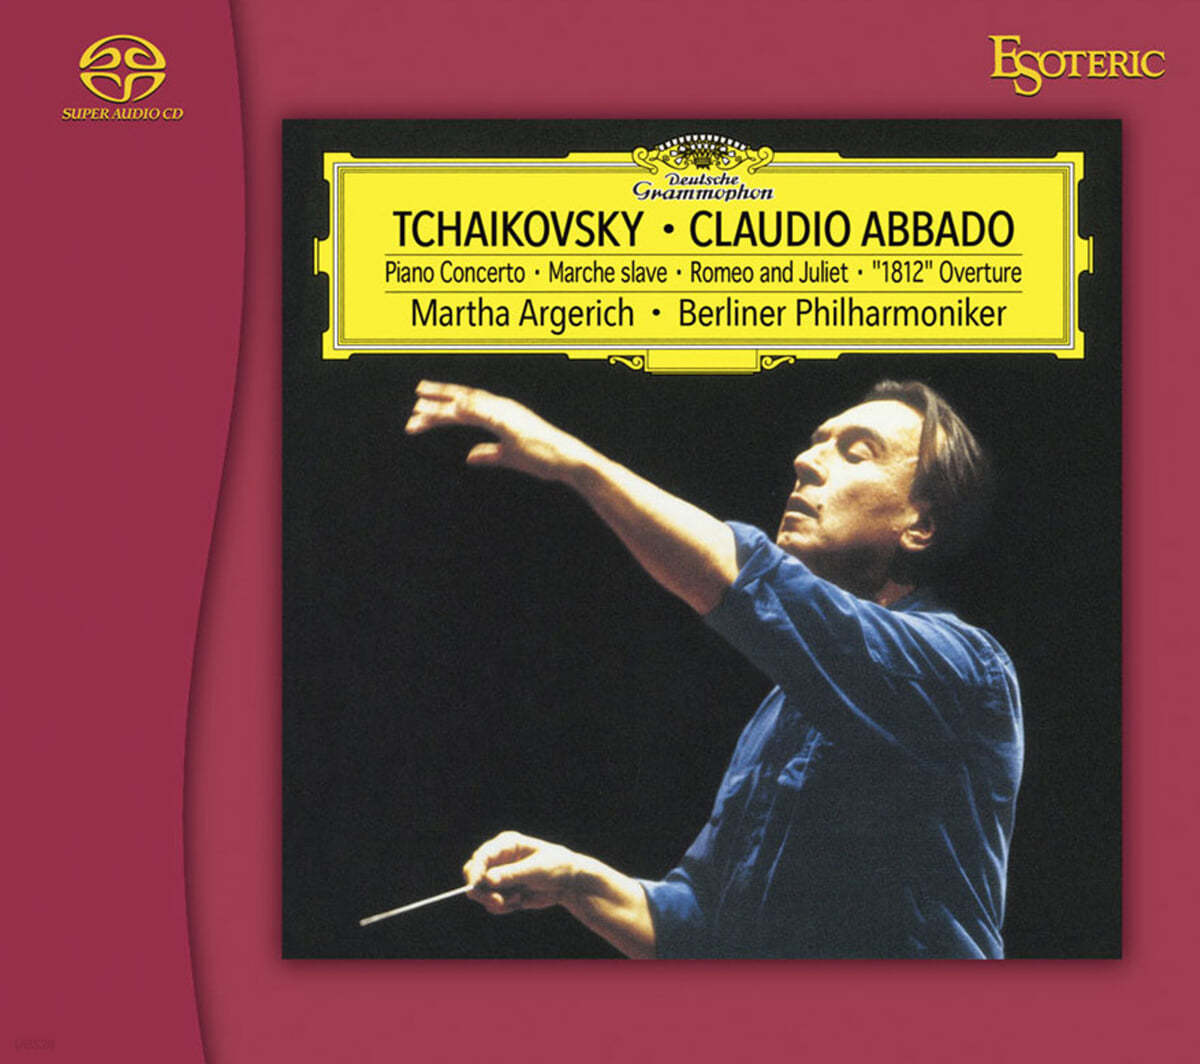 Claudio Abbado 차이코프스키: 피아노 협주곡 1번, 로미오와 줄리엣, 1812년 서곡 (Tchaikovsky: Concerto No. 1, 1812 Overture)